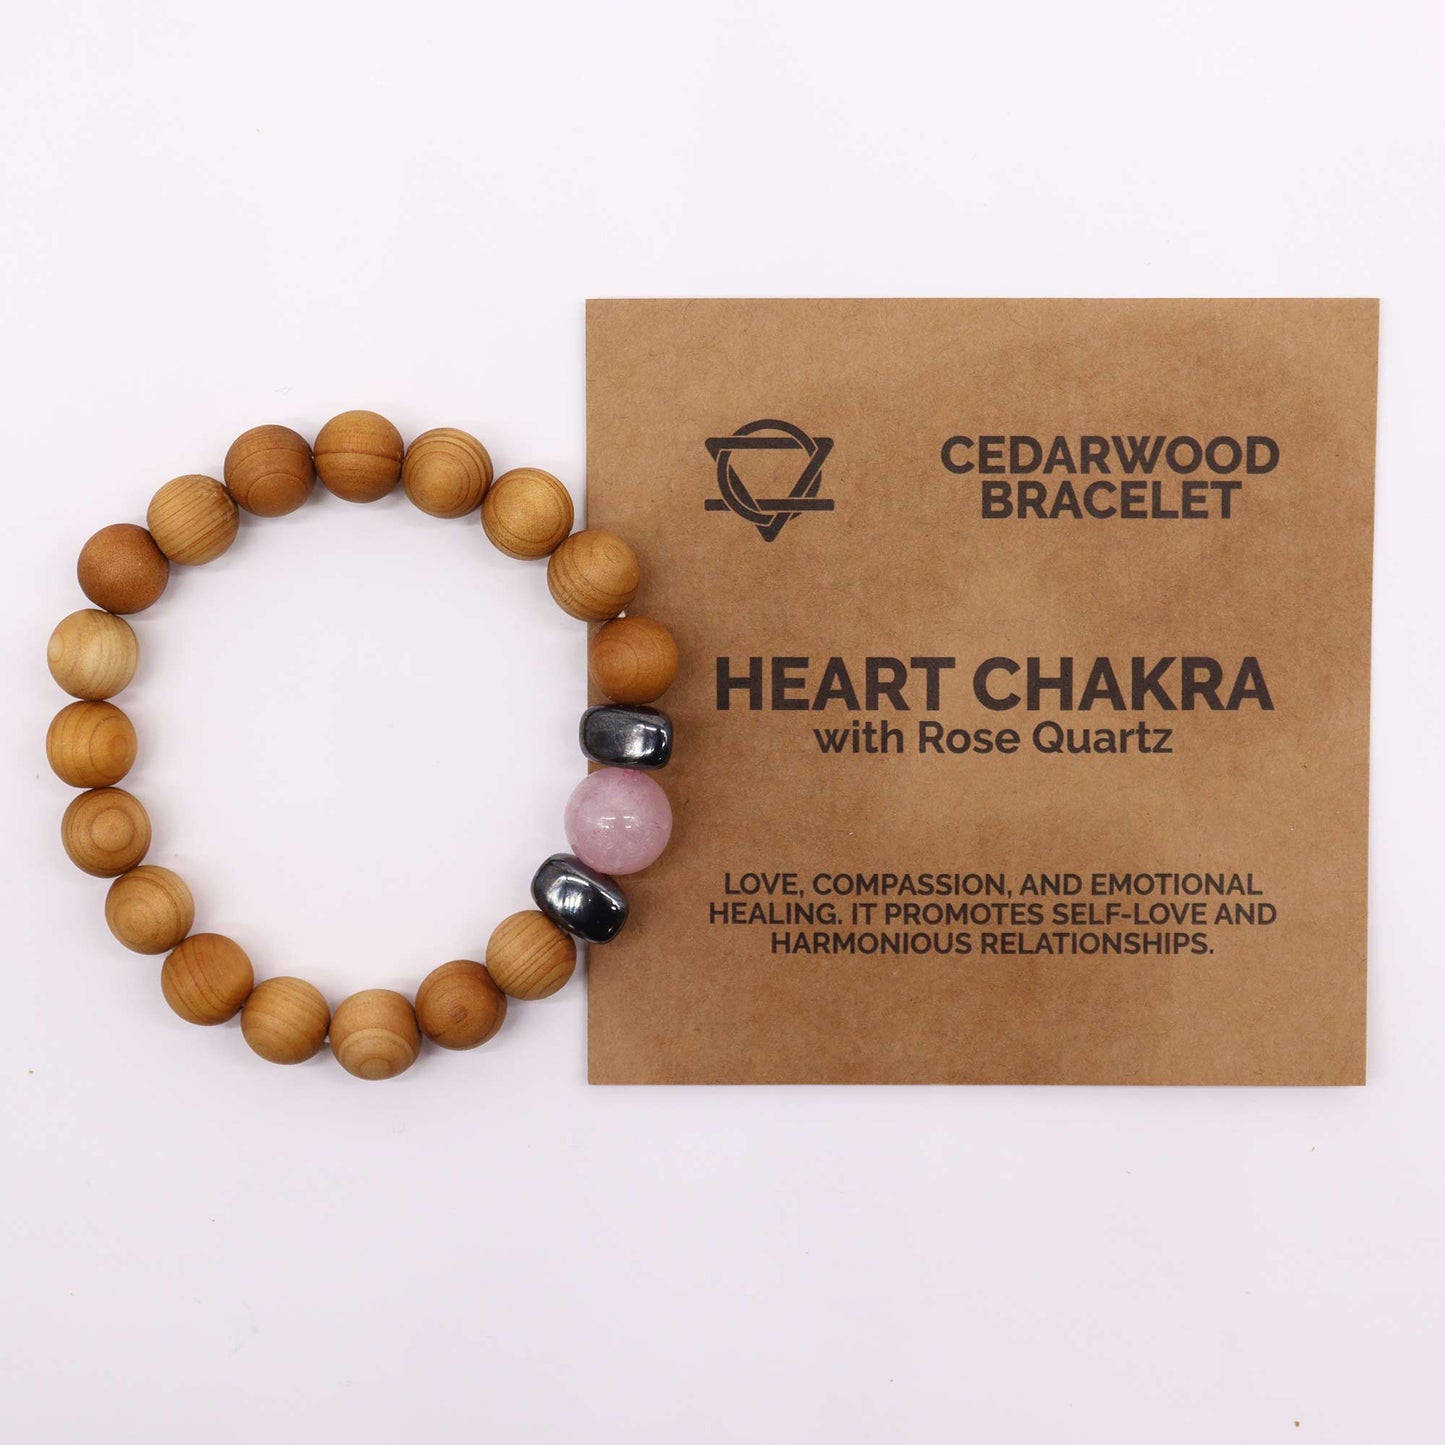 Cedarwood Heart Chakra Bangle with Rose Quartz